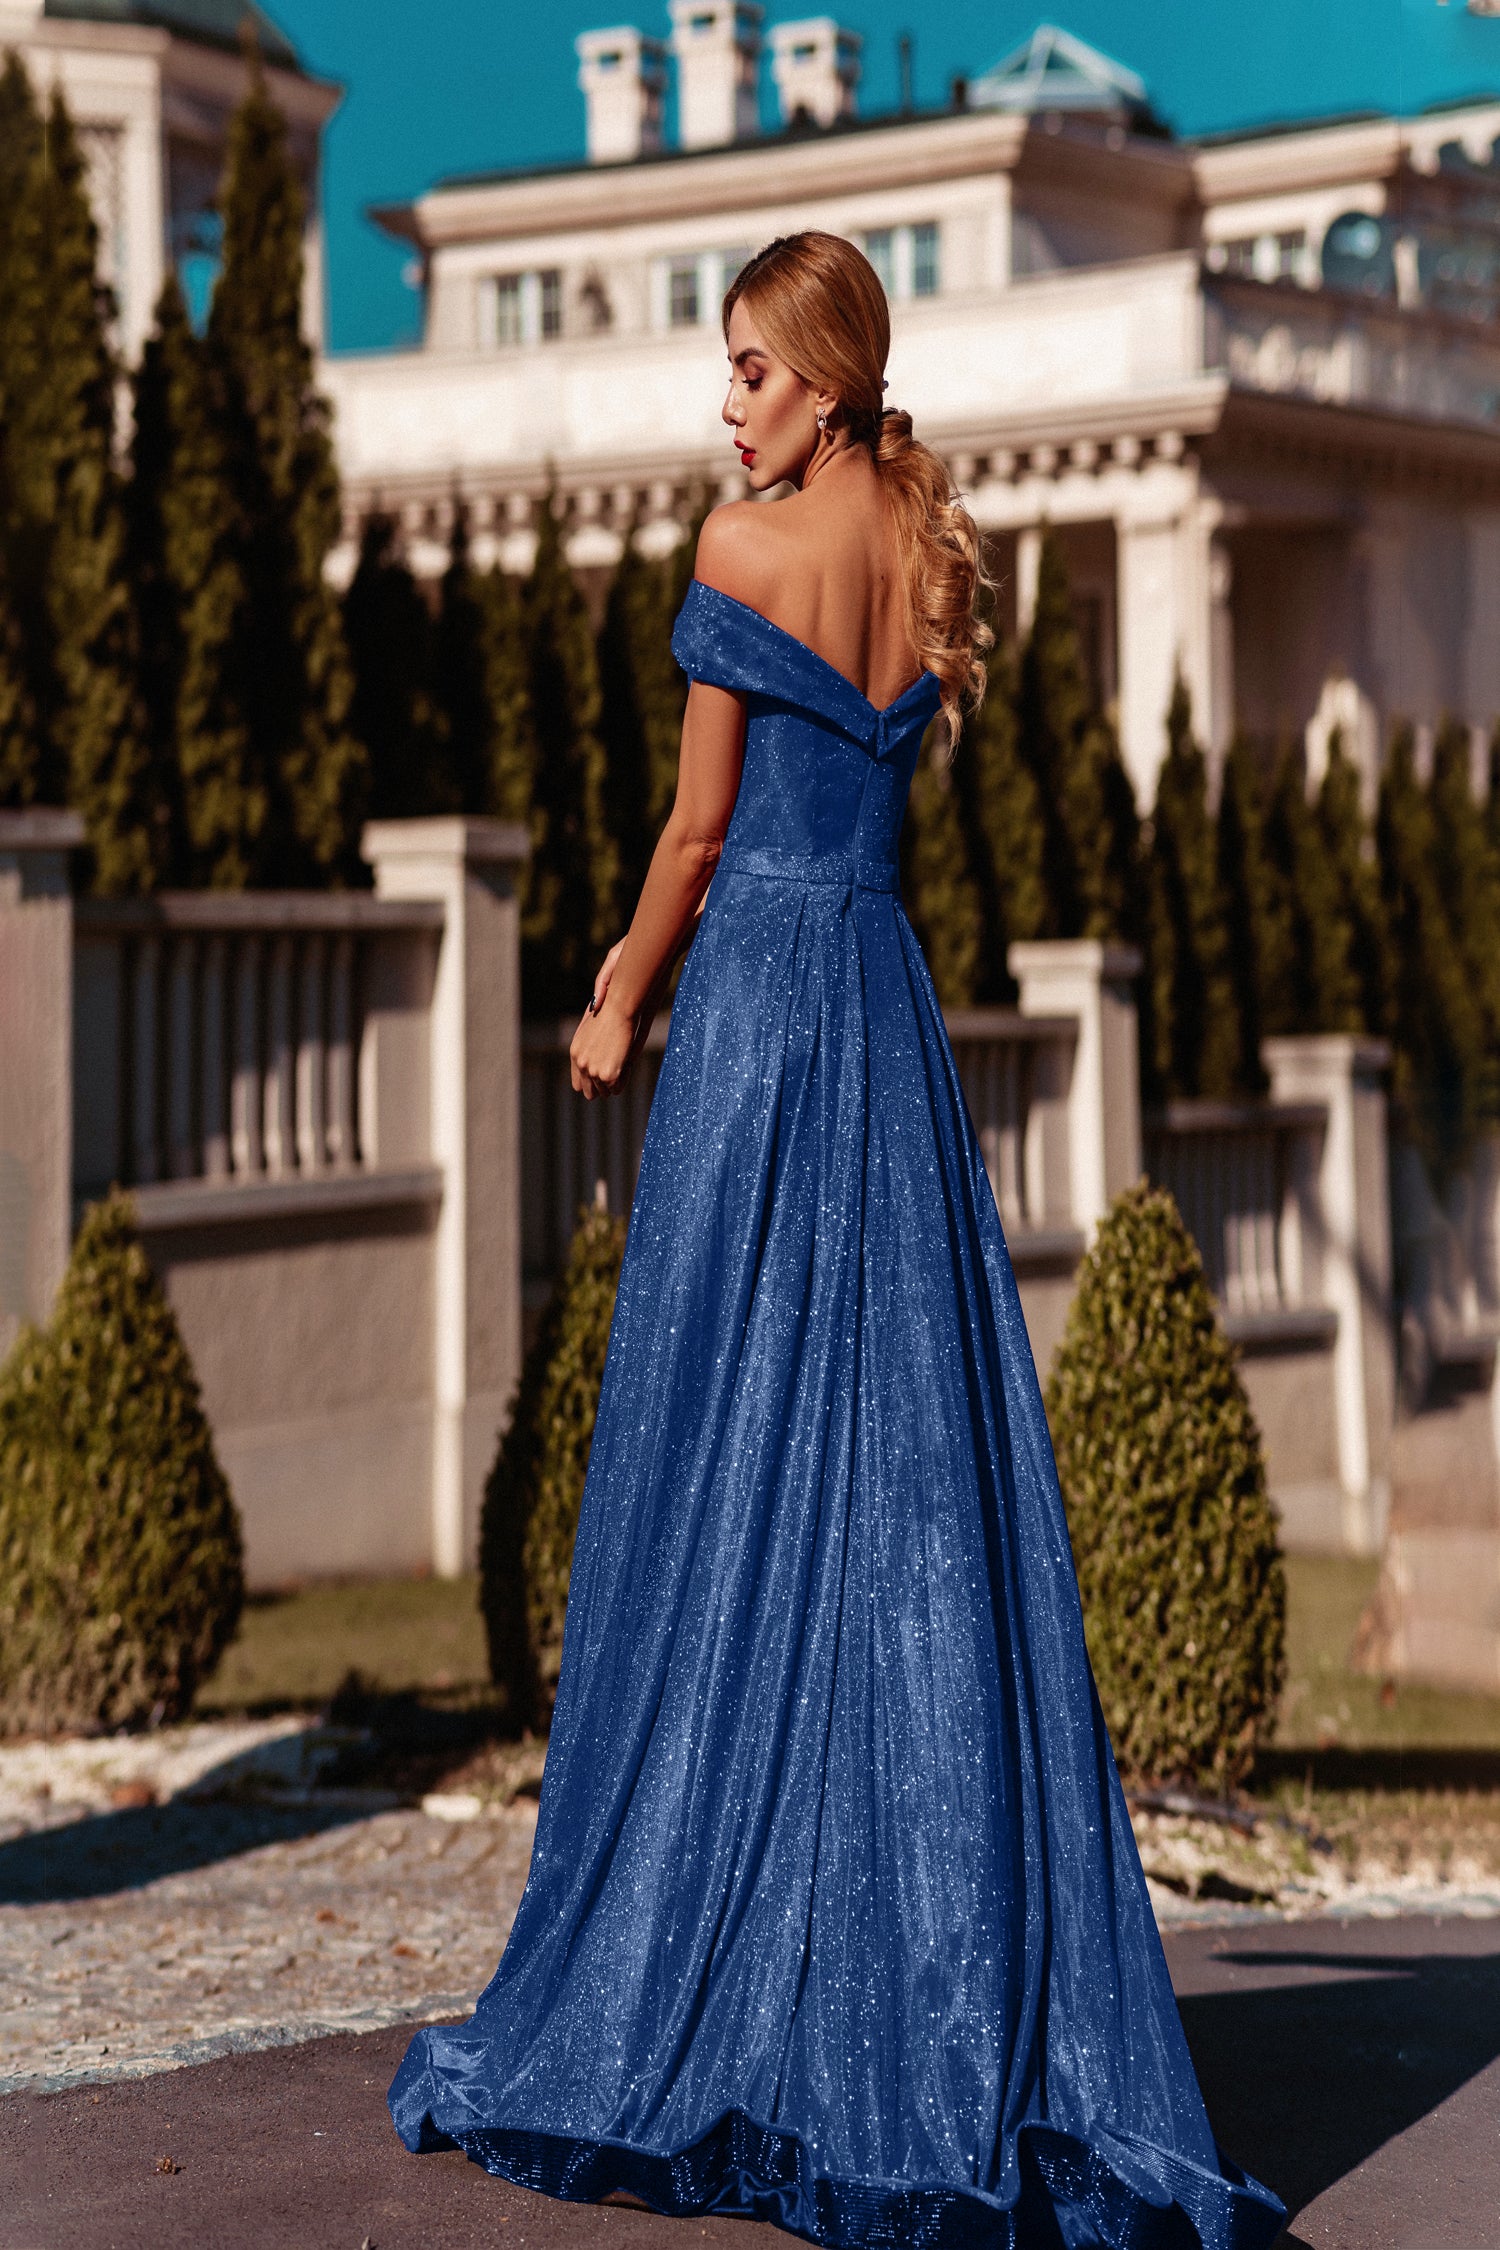 Tina Holly Couture Designer TW028 Indigo Glitter Formal Dress w Over Skirt